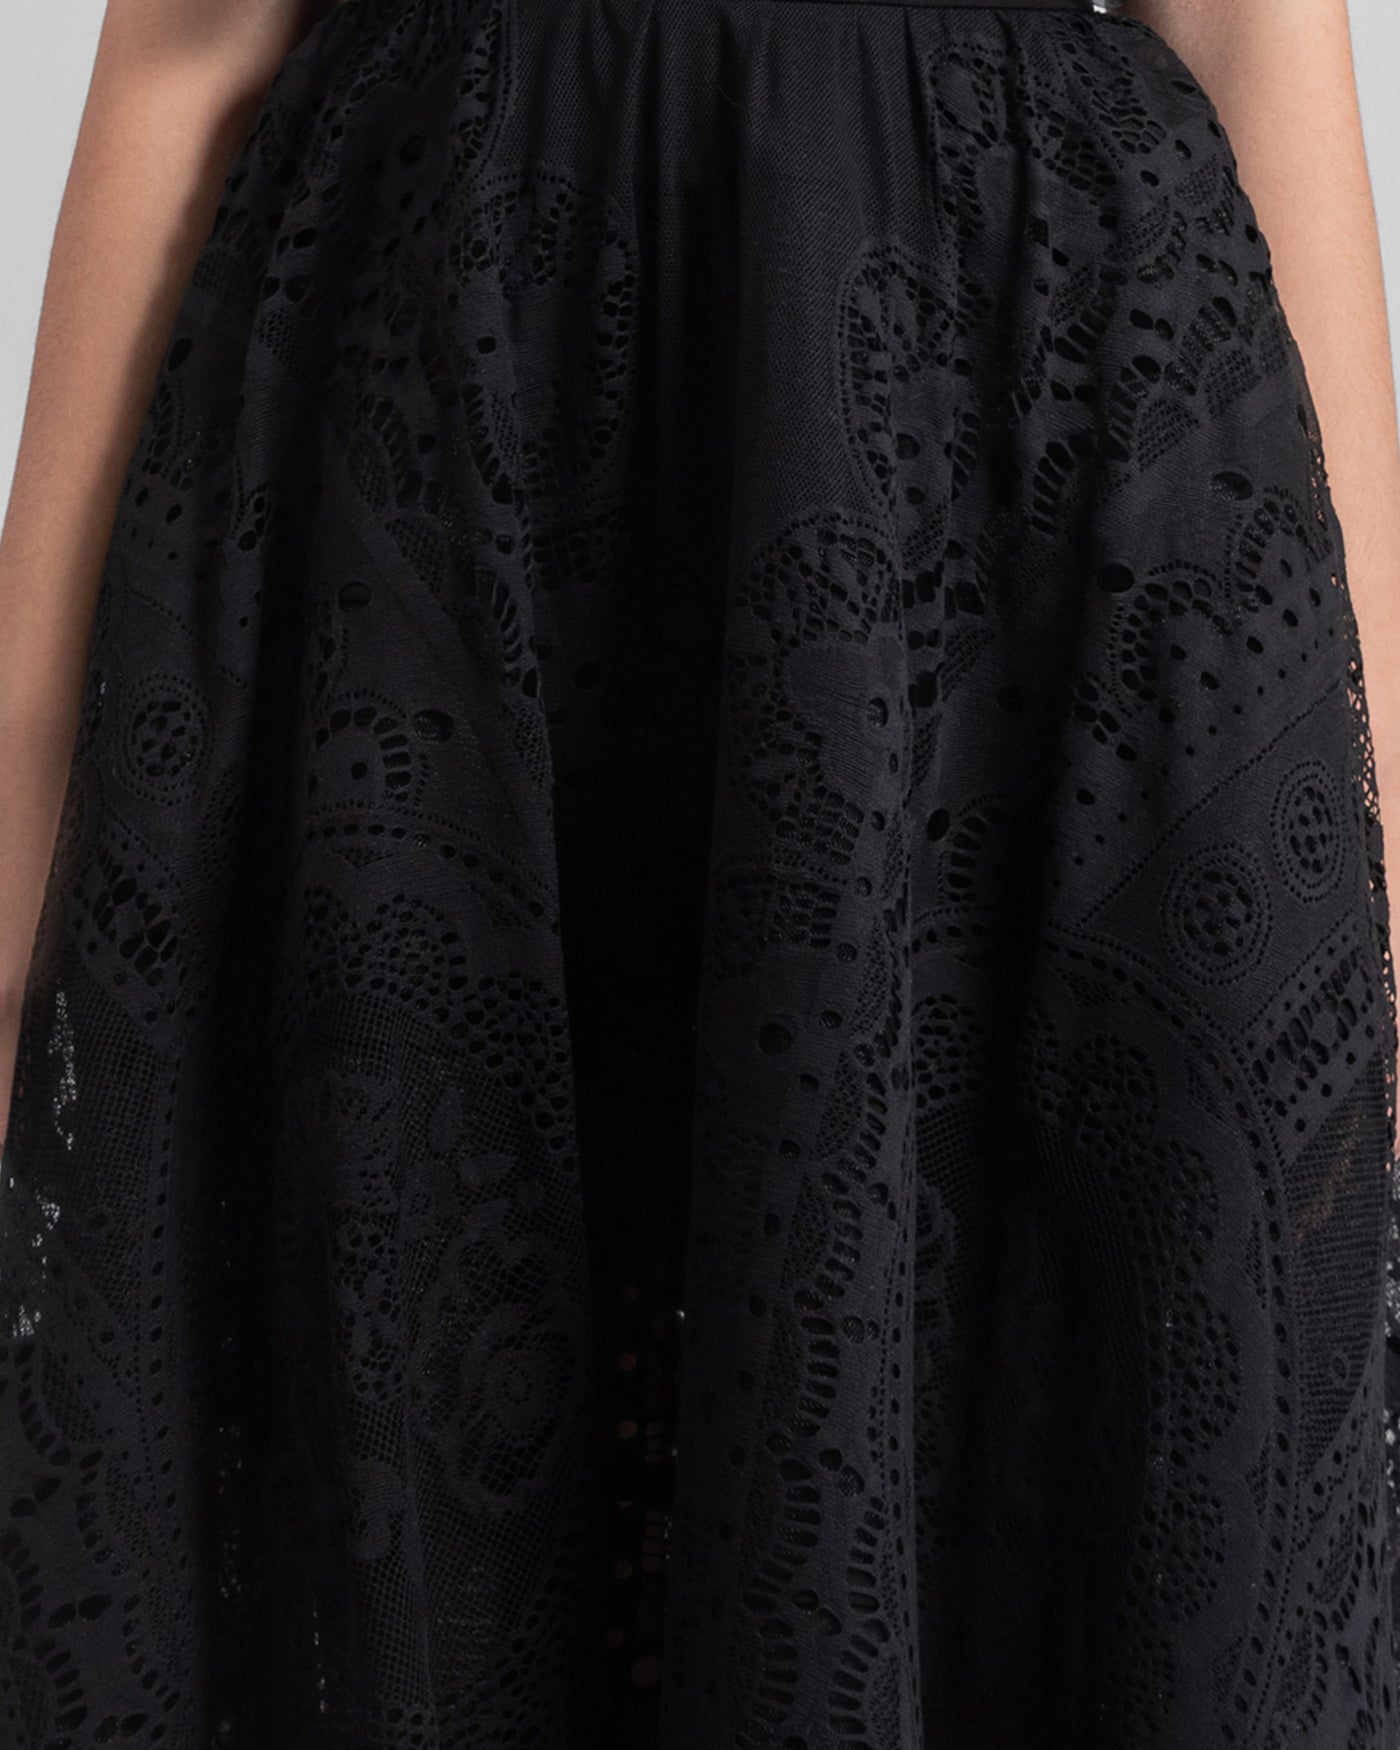 Lace Black Skirt